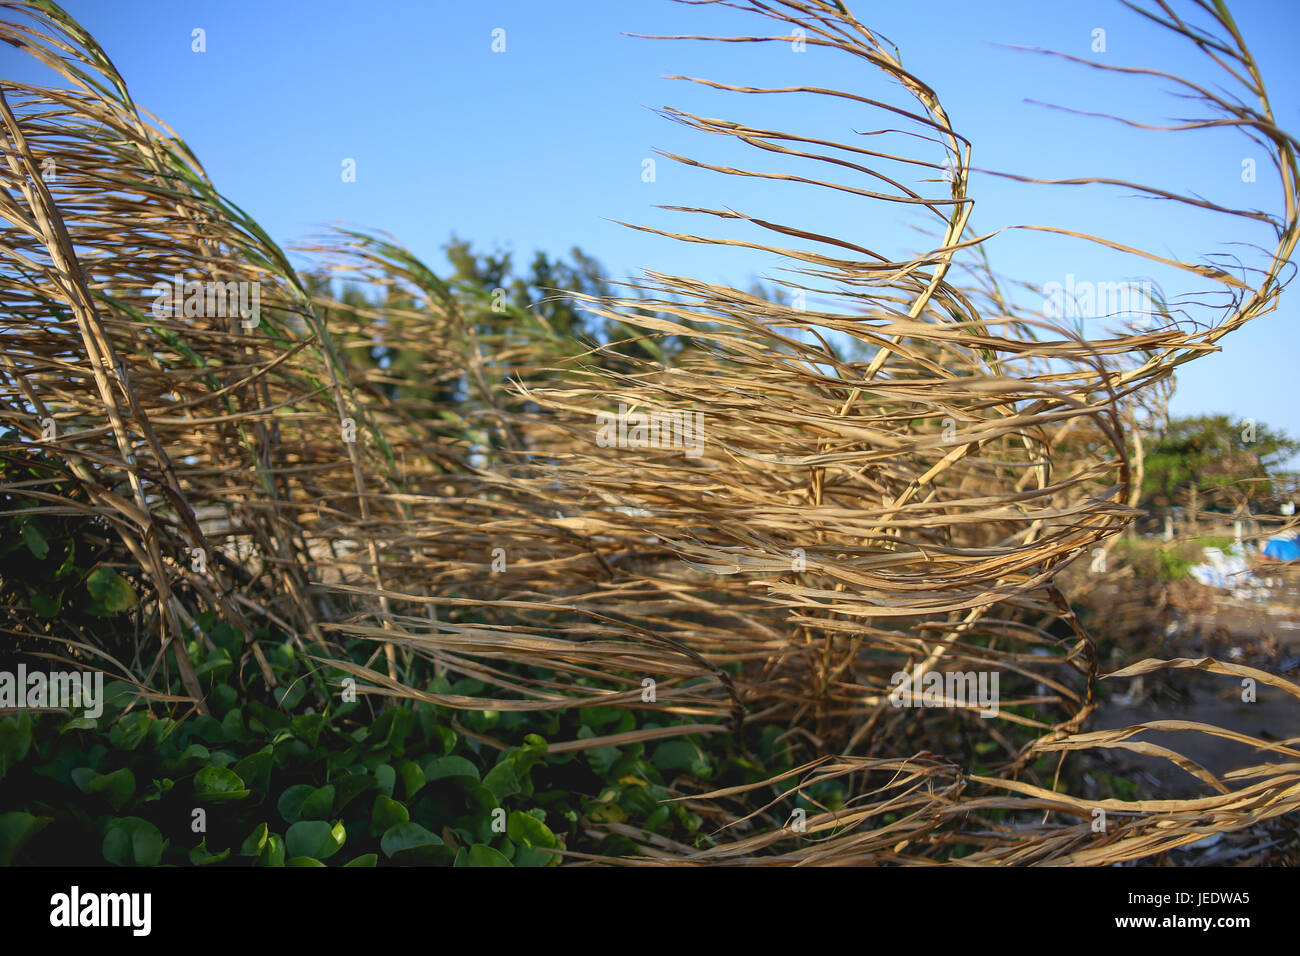 Tote Rasen getrocknet Rasen in den Wind zu gehen Cong Beach Tan Thanh Tien Giang Viet nam Stockfoto